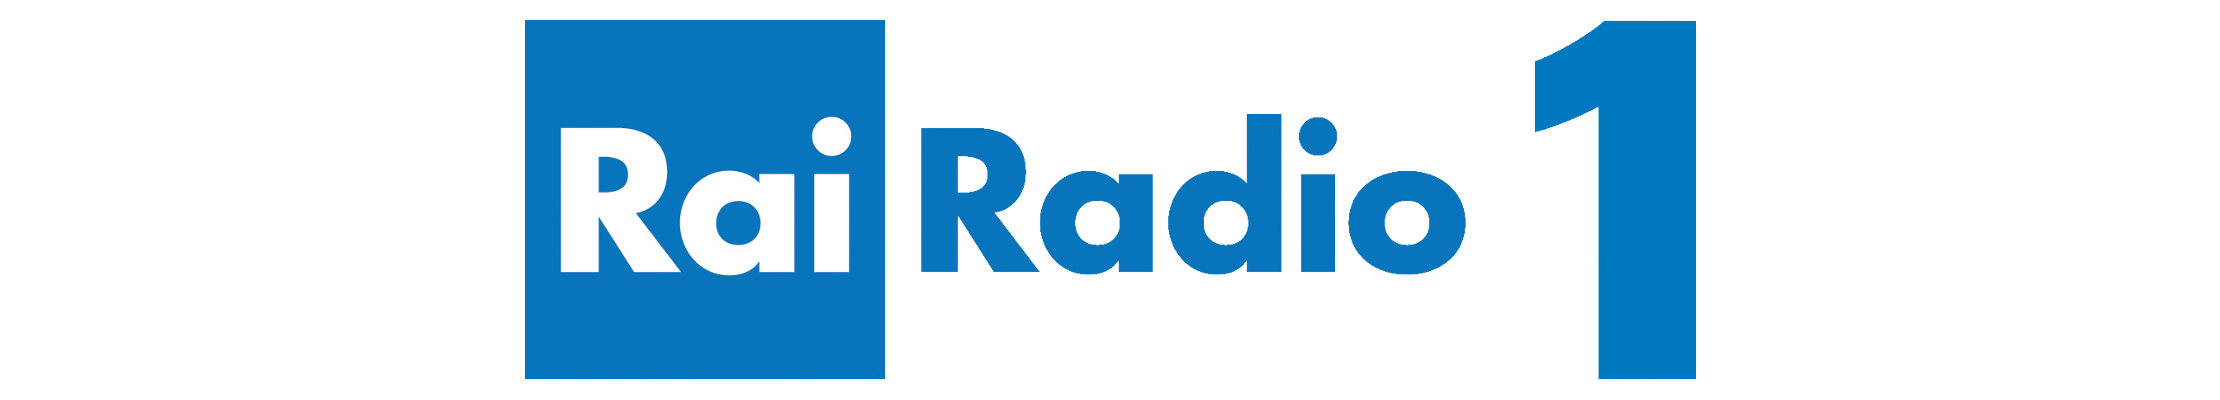 RaiRadio1_RGB